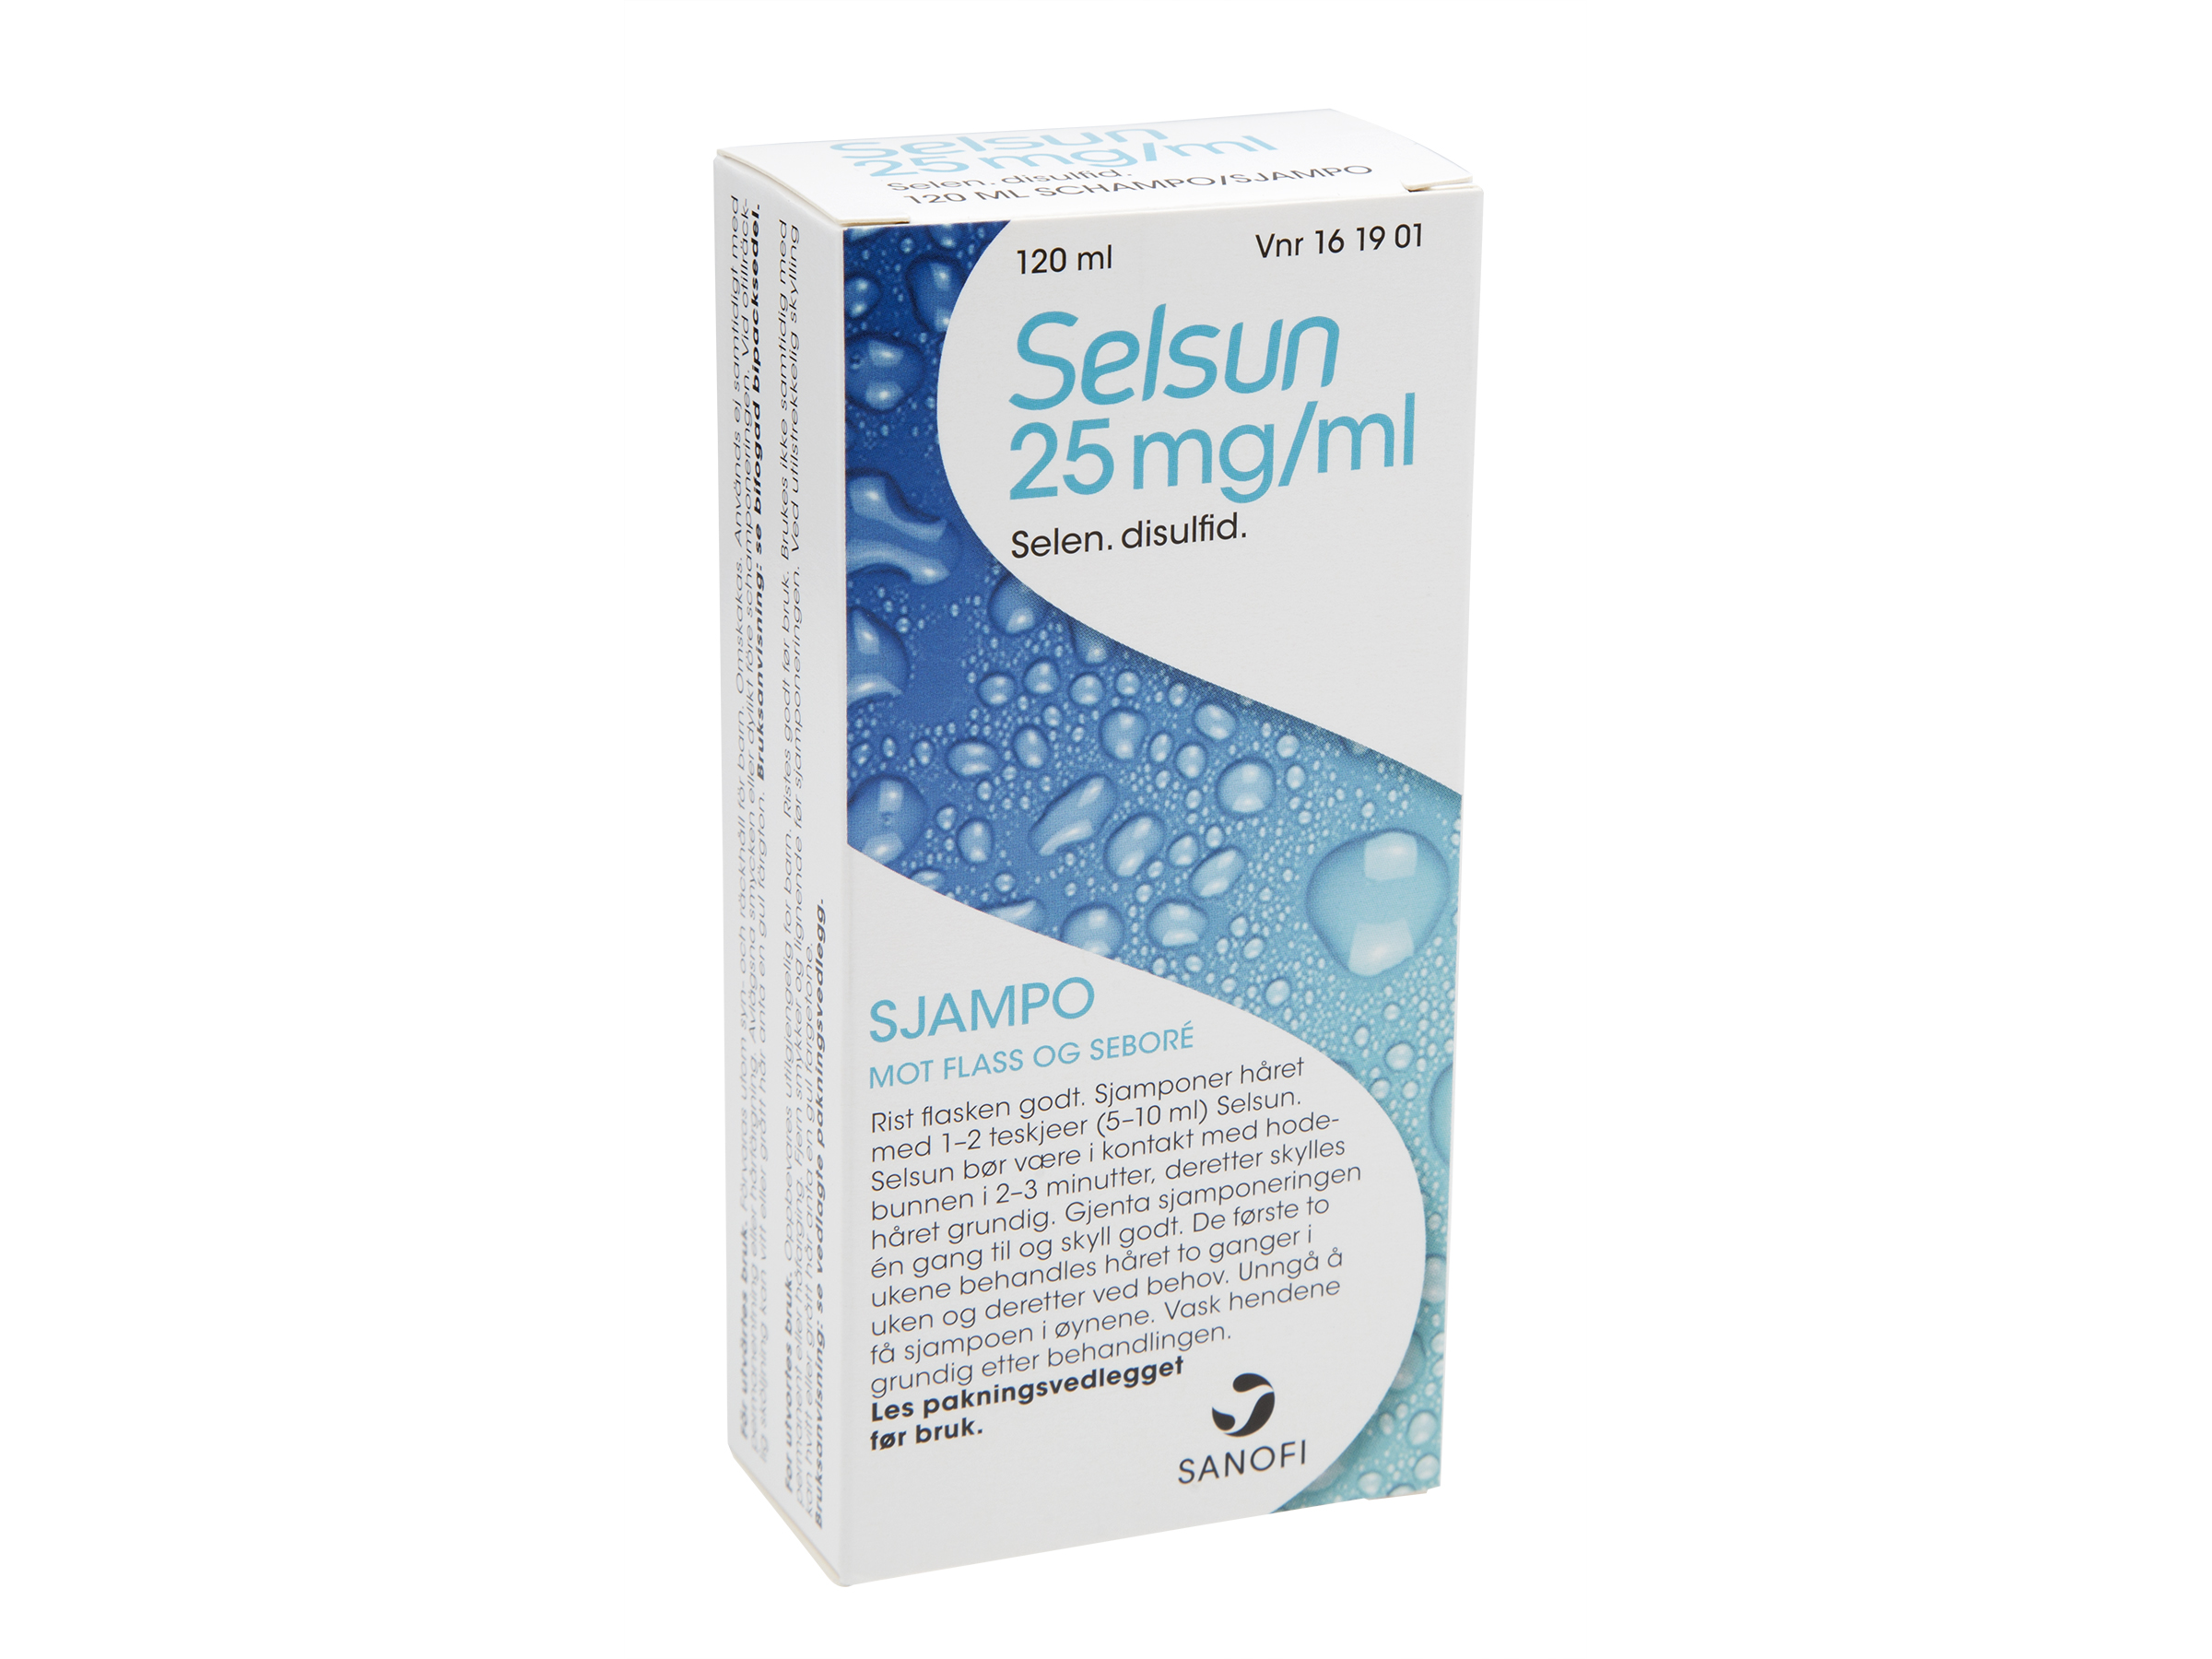 Selsun Shampoo 25mg/ml, 120 ml